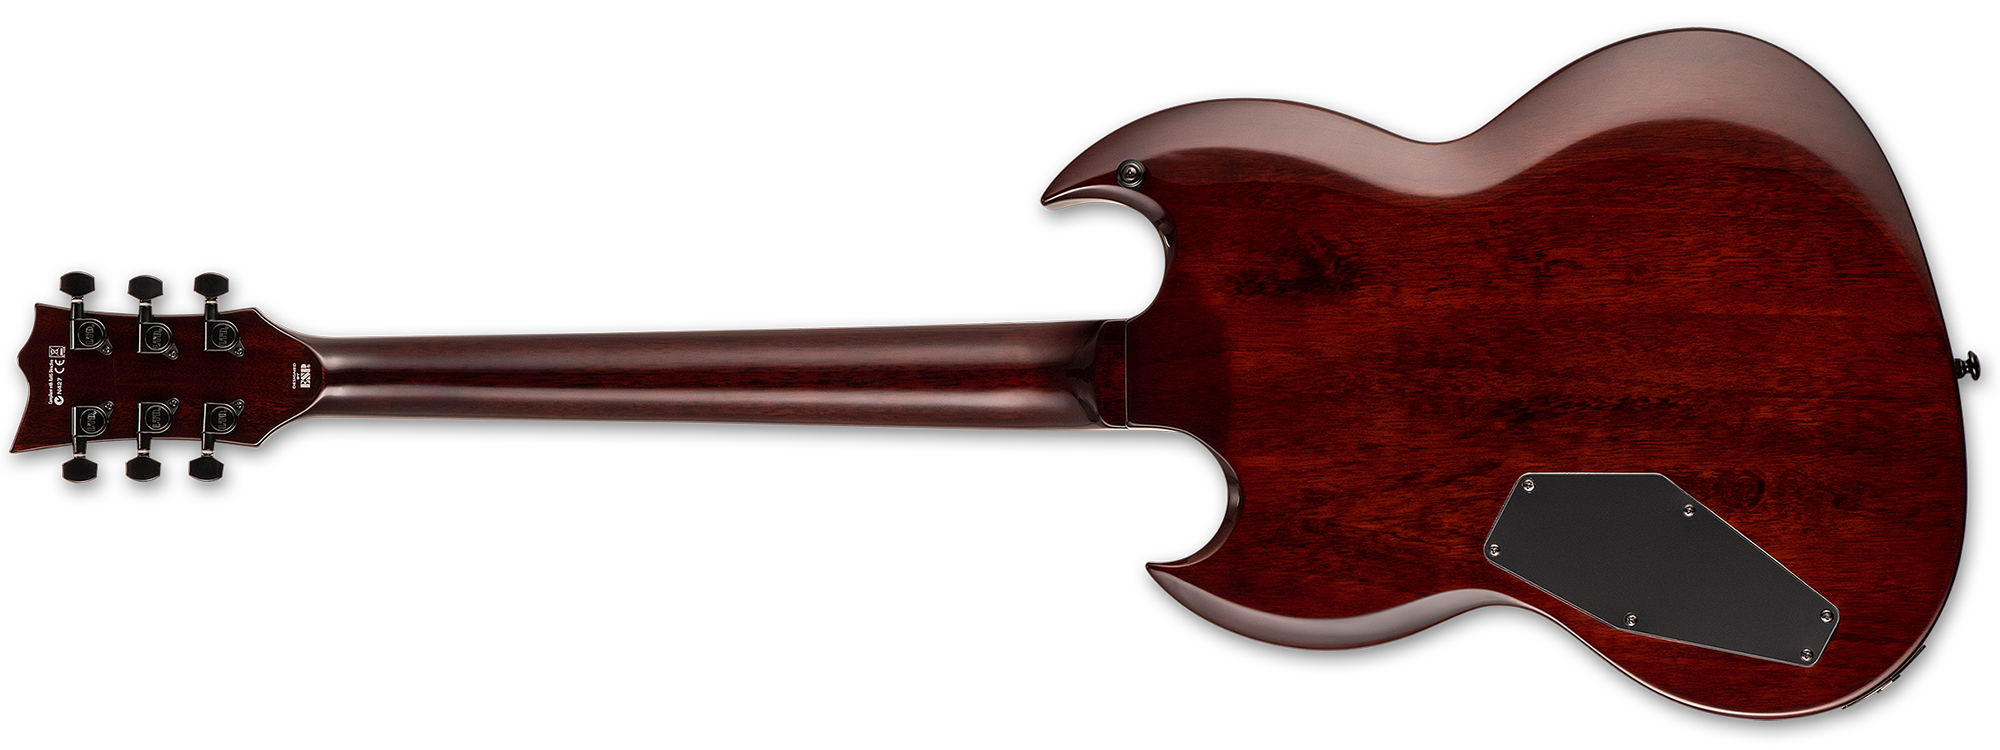 Ltd Viper-256 Hh Ht Jat - Dark Brown Sunburst - Guitarra eléctrica de doble corte. - Variation 2